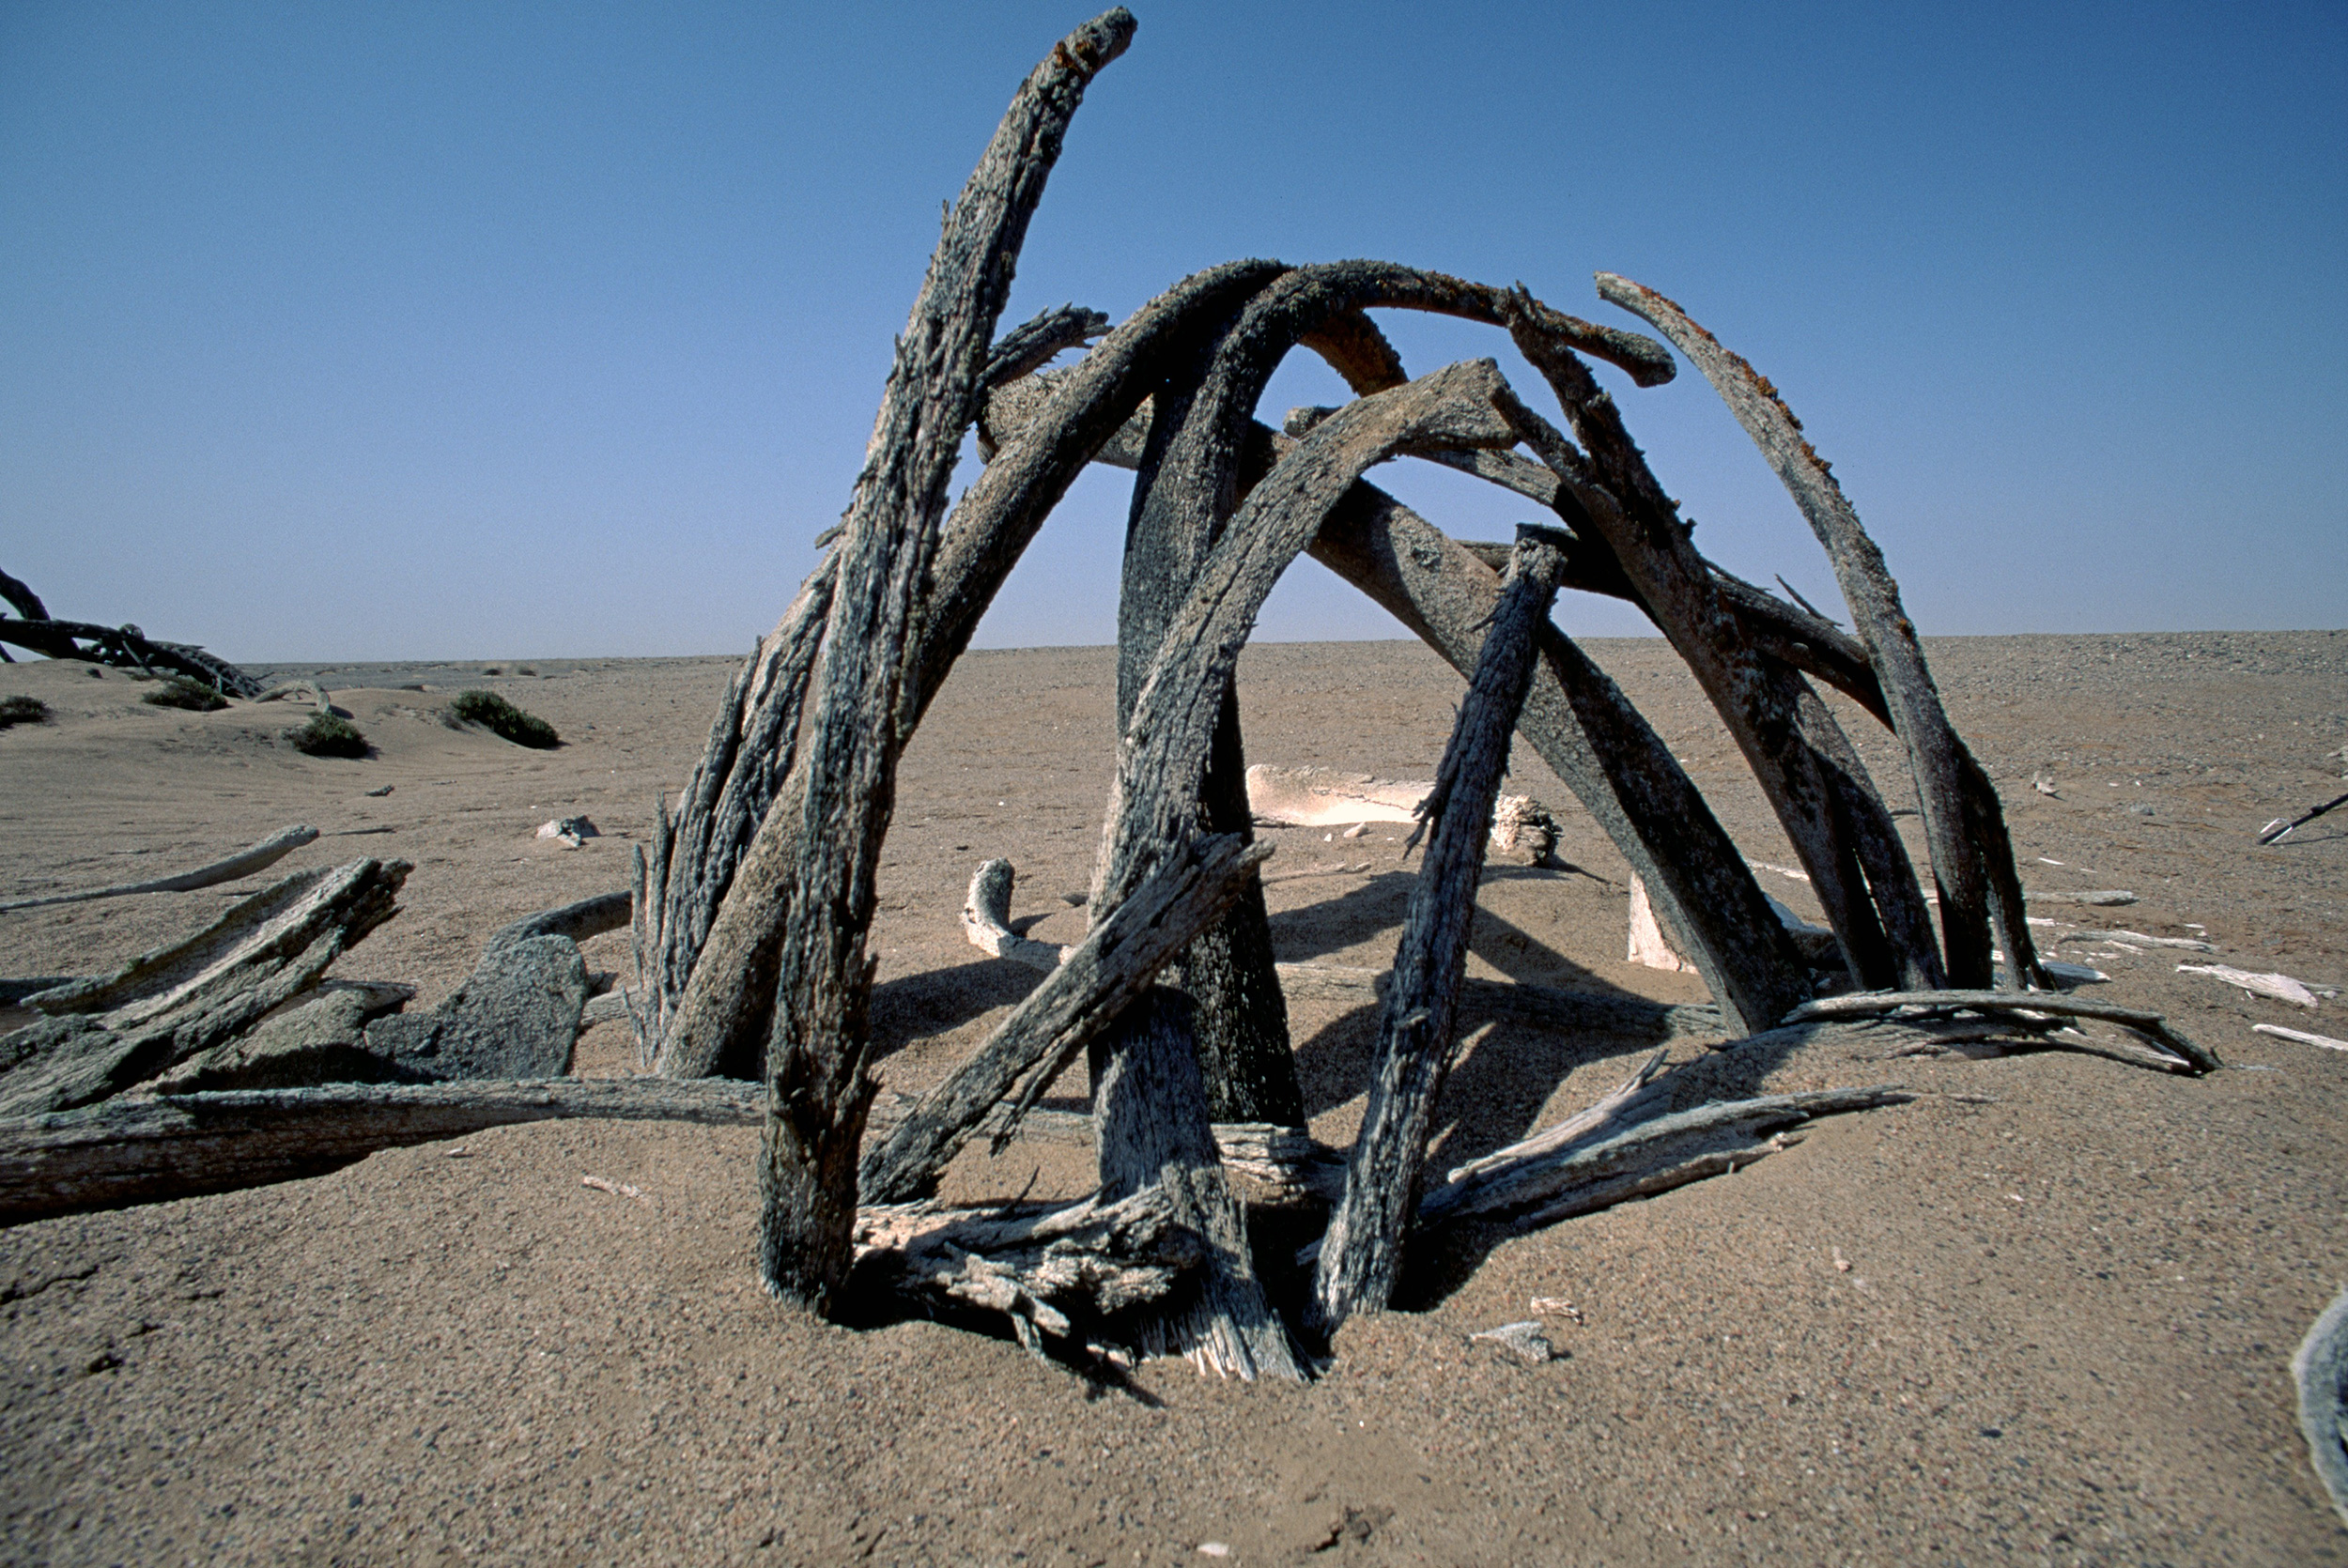 Скелеты сахары. Намибия берег скелетов (Skeleton Coast). Китовые кости на побережье.